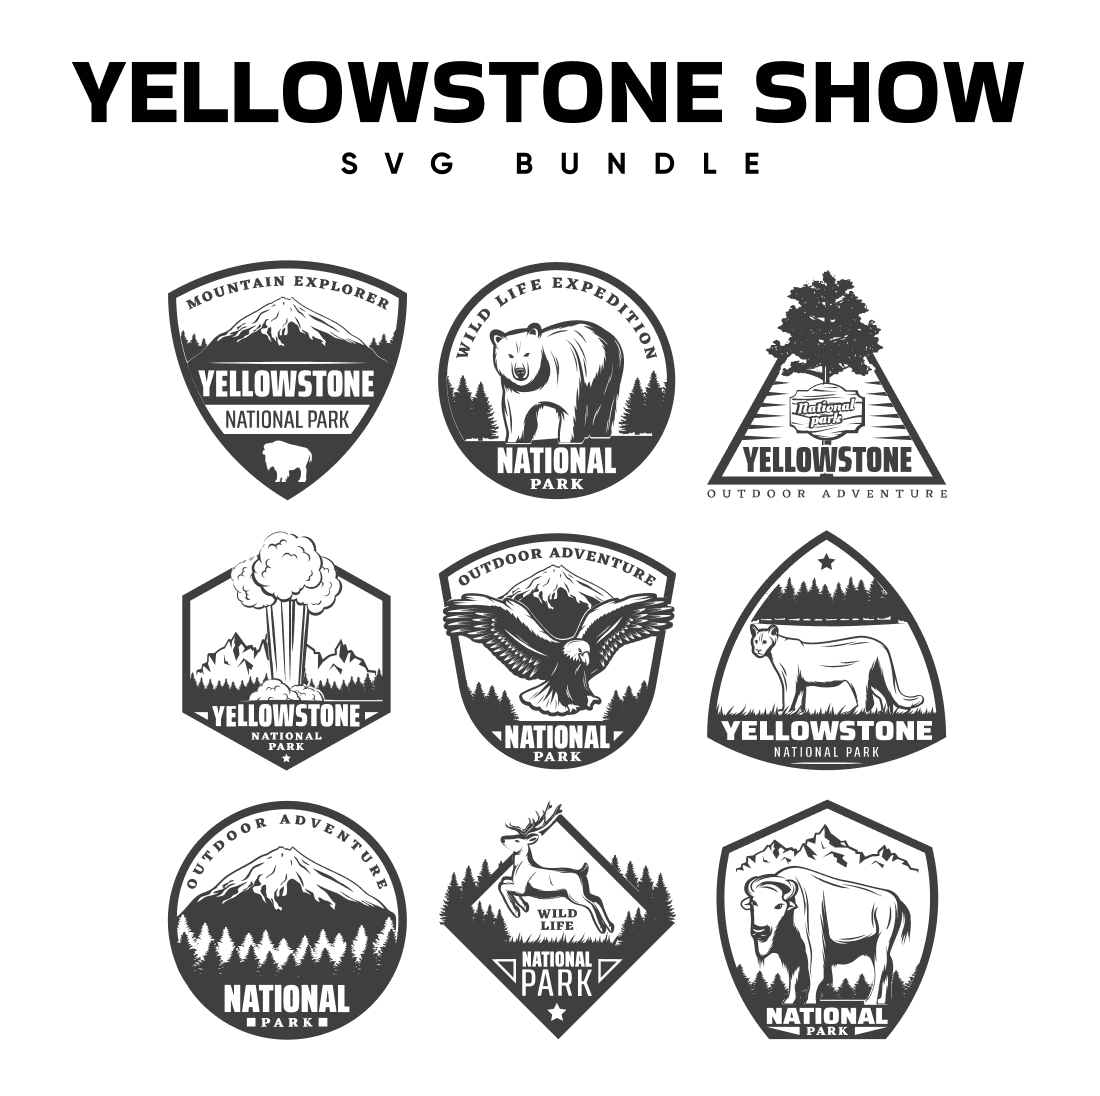 Yellowstone Show SVG.